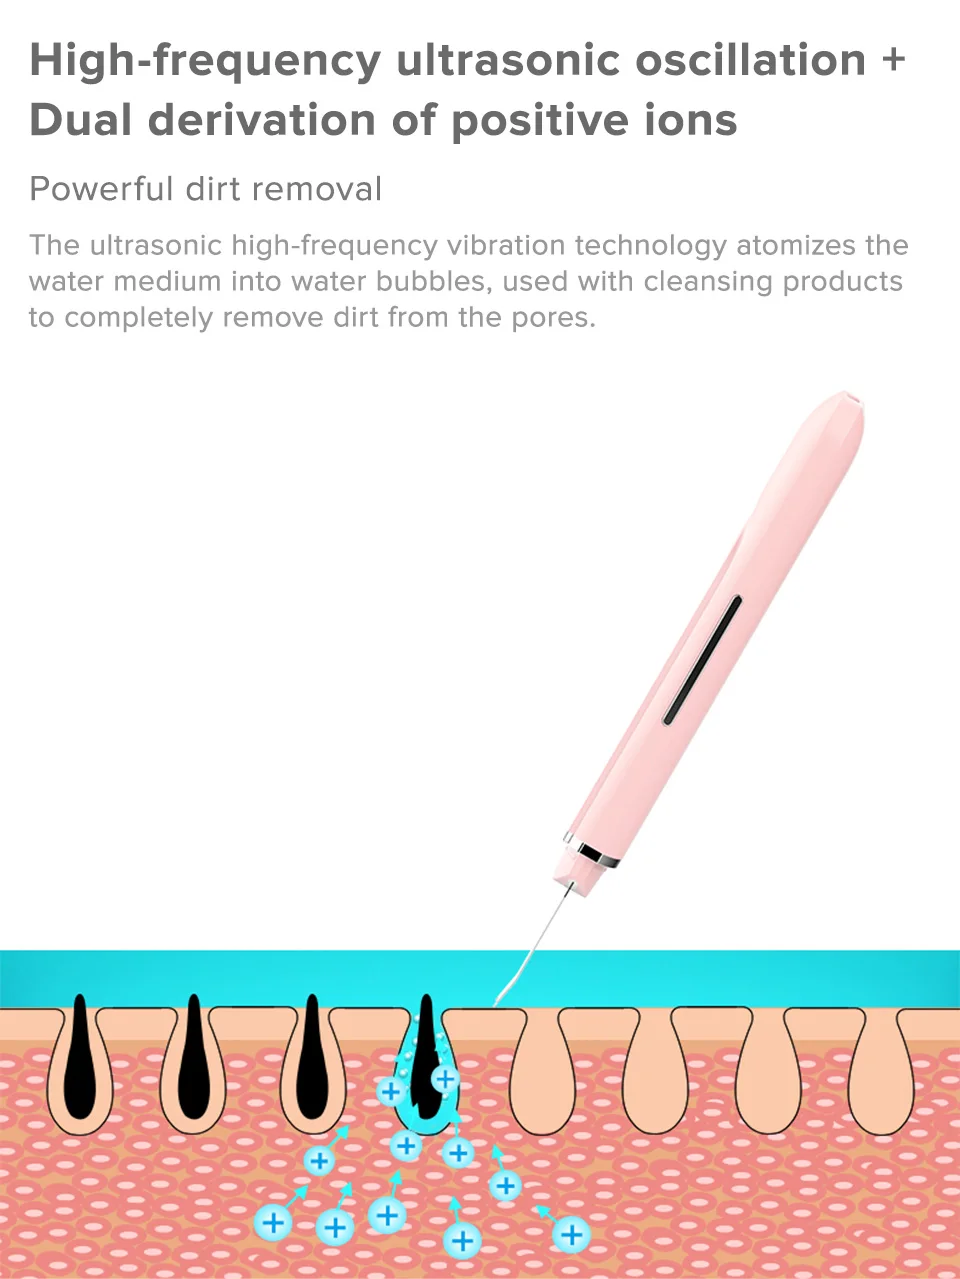 Inface ultrasonic skin scrubber cleaner ion acne blackhead remover peeling shovel cleaner peeling facial massager